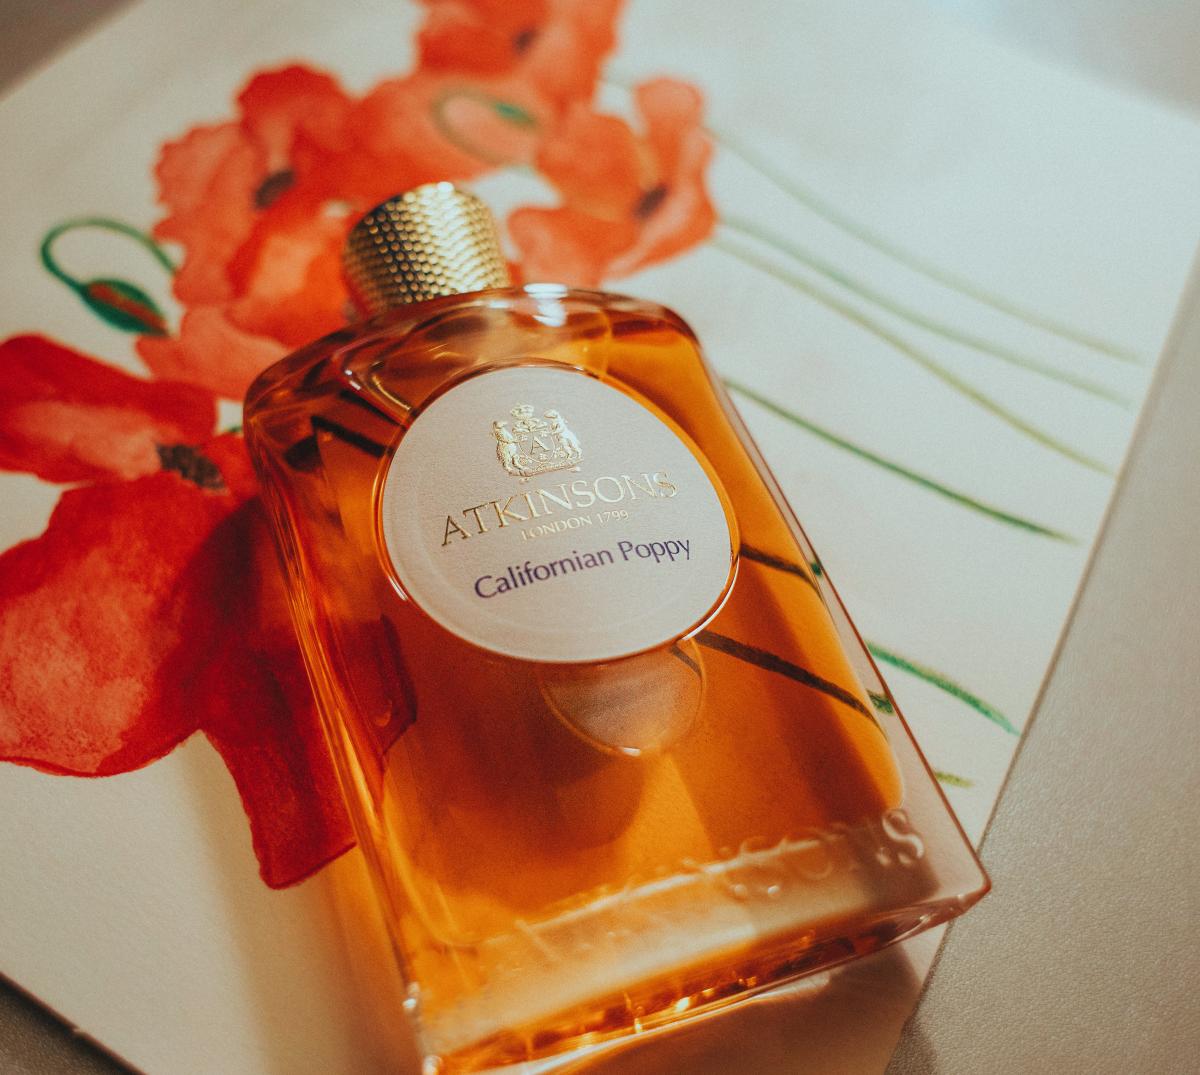 California Poppy (new) Atkinsons perfume - a fragrance for women 2017